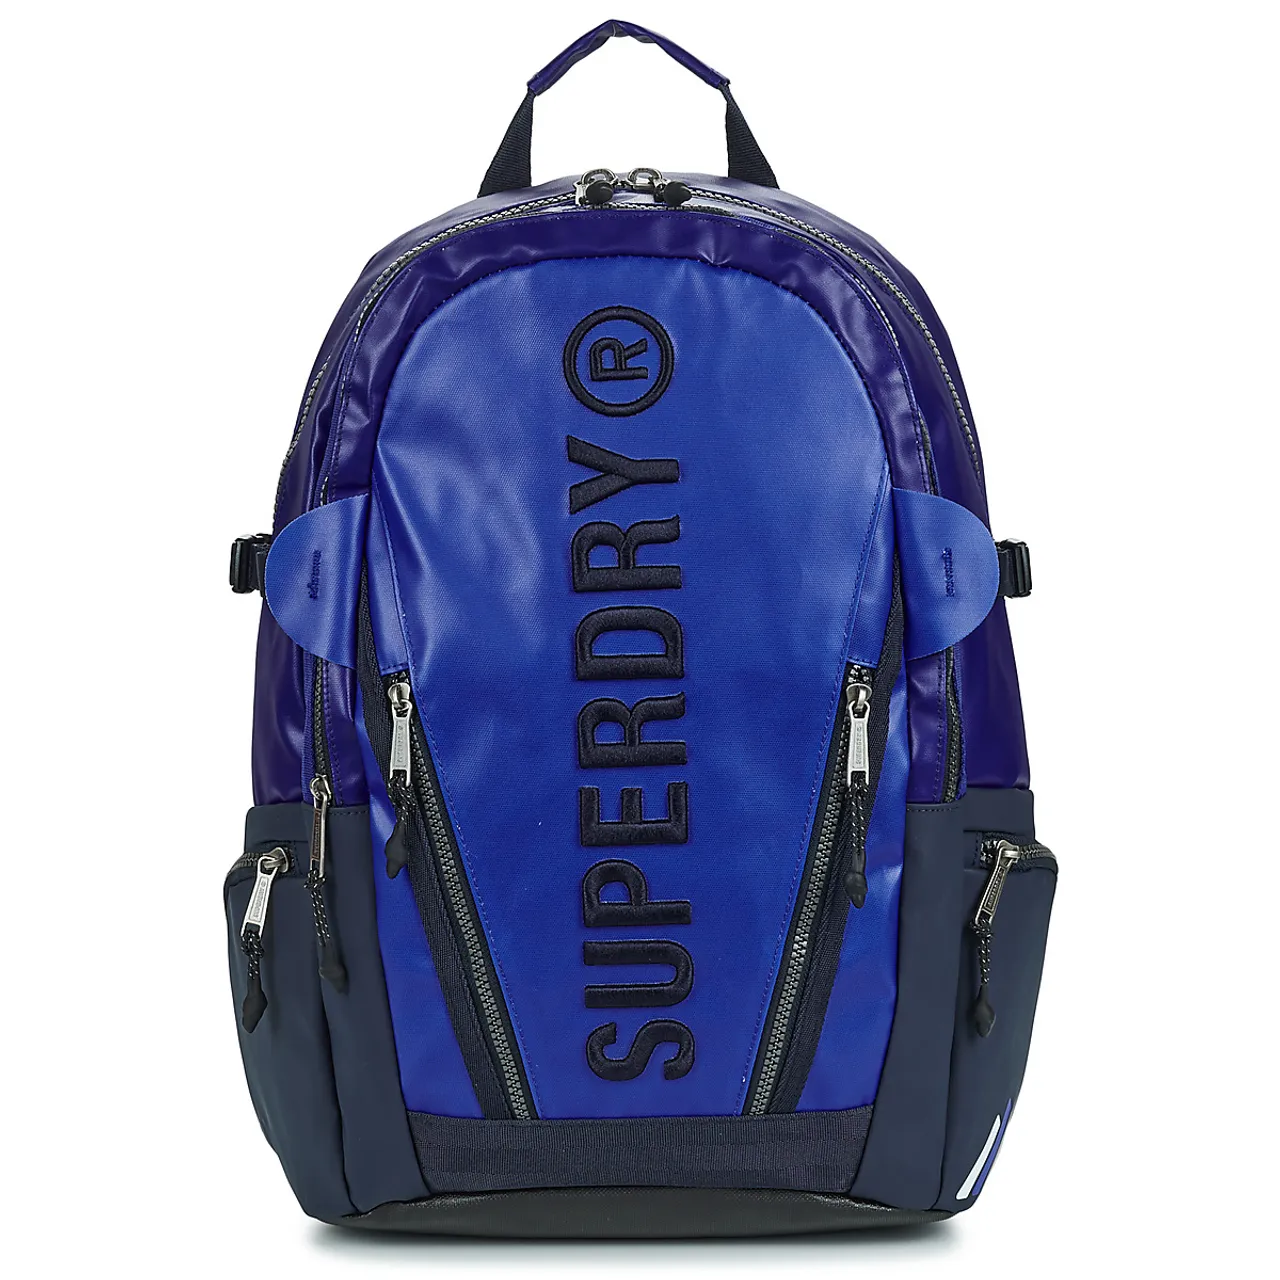 Superdry  TARP RUCKSACK  women's Backpack in Blue